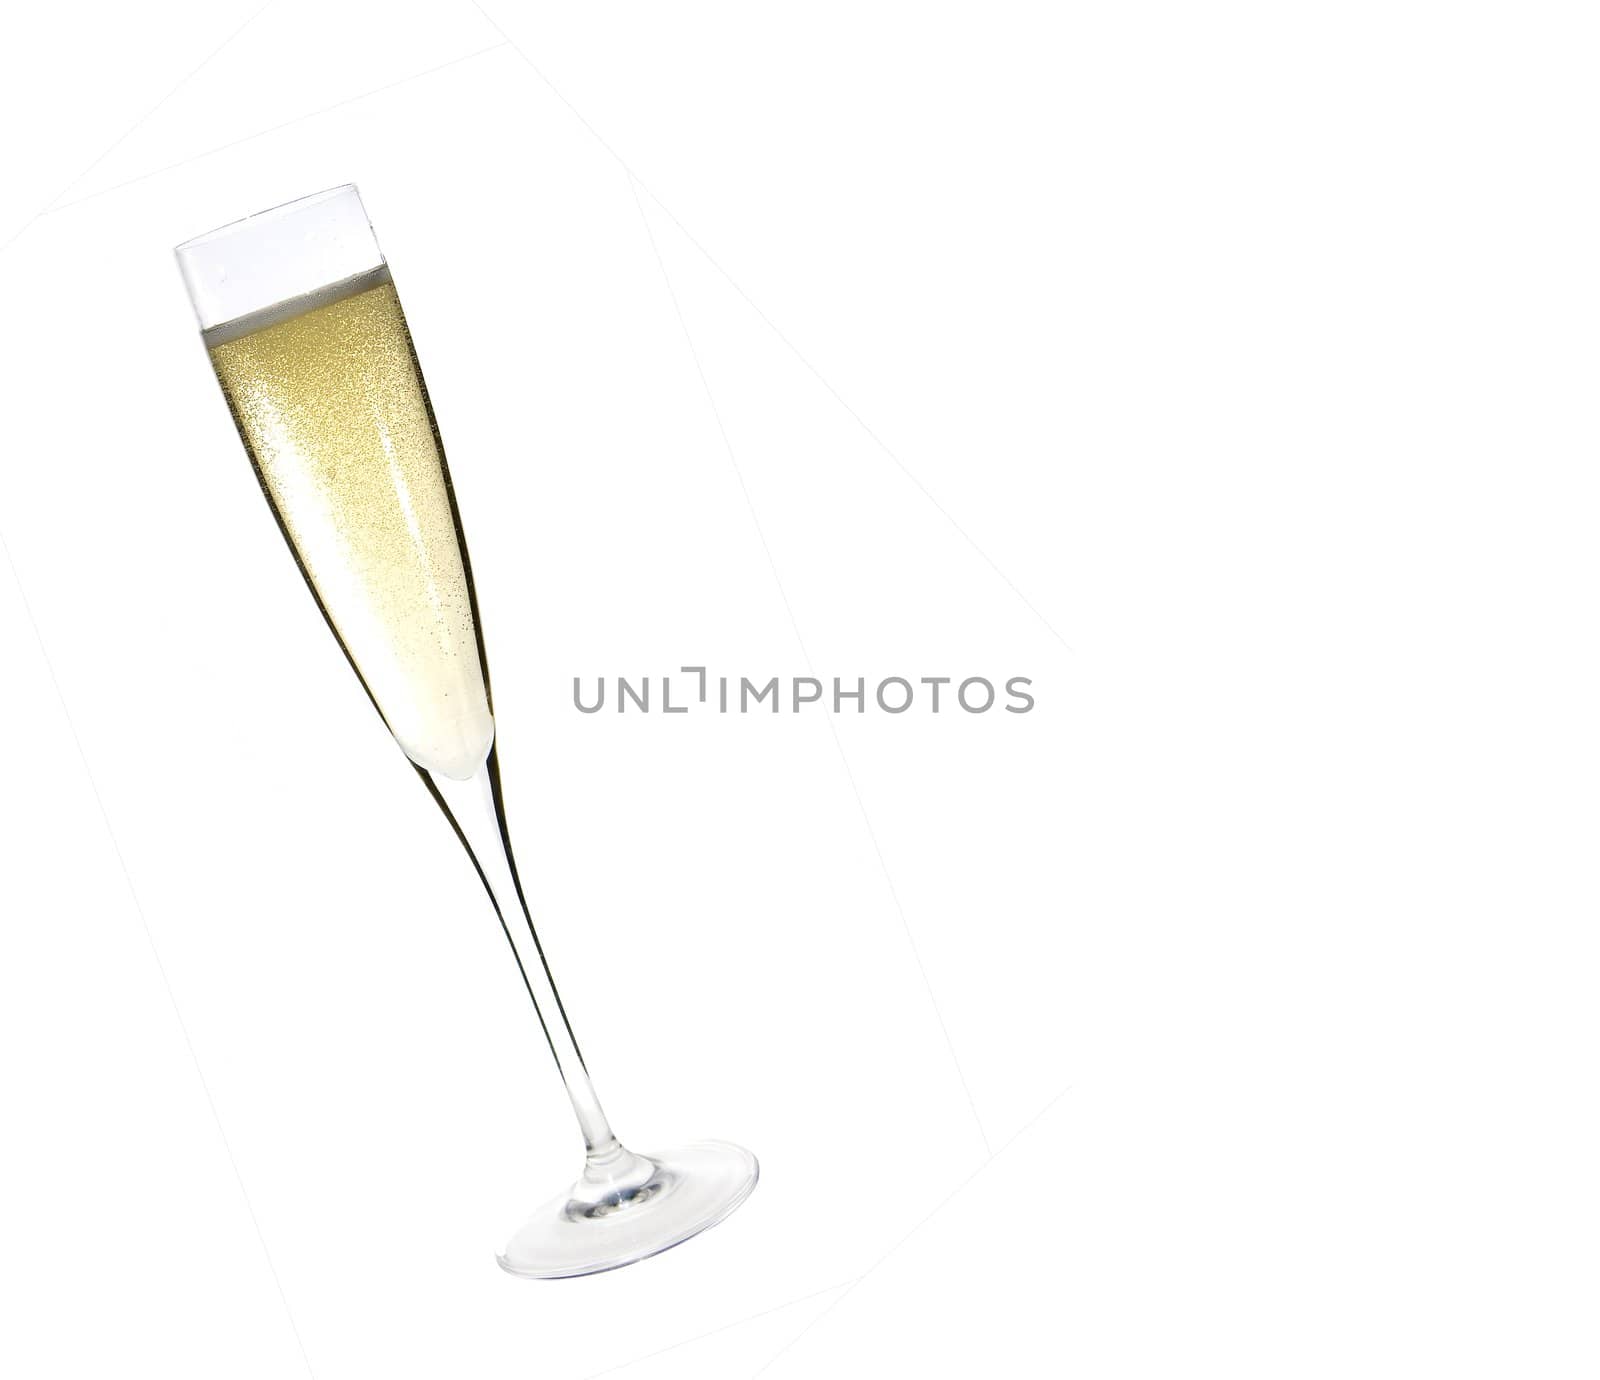 Champagne glass celebration by Trebuchet